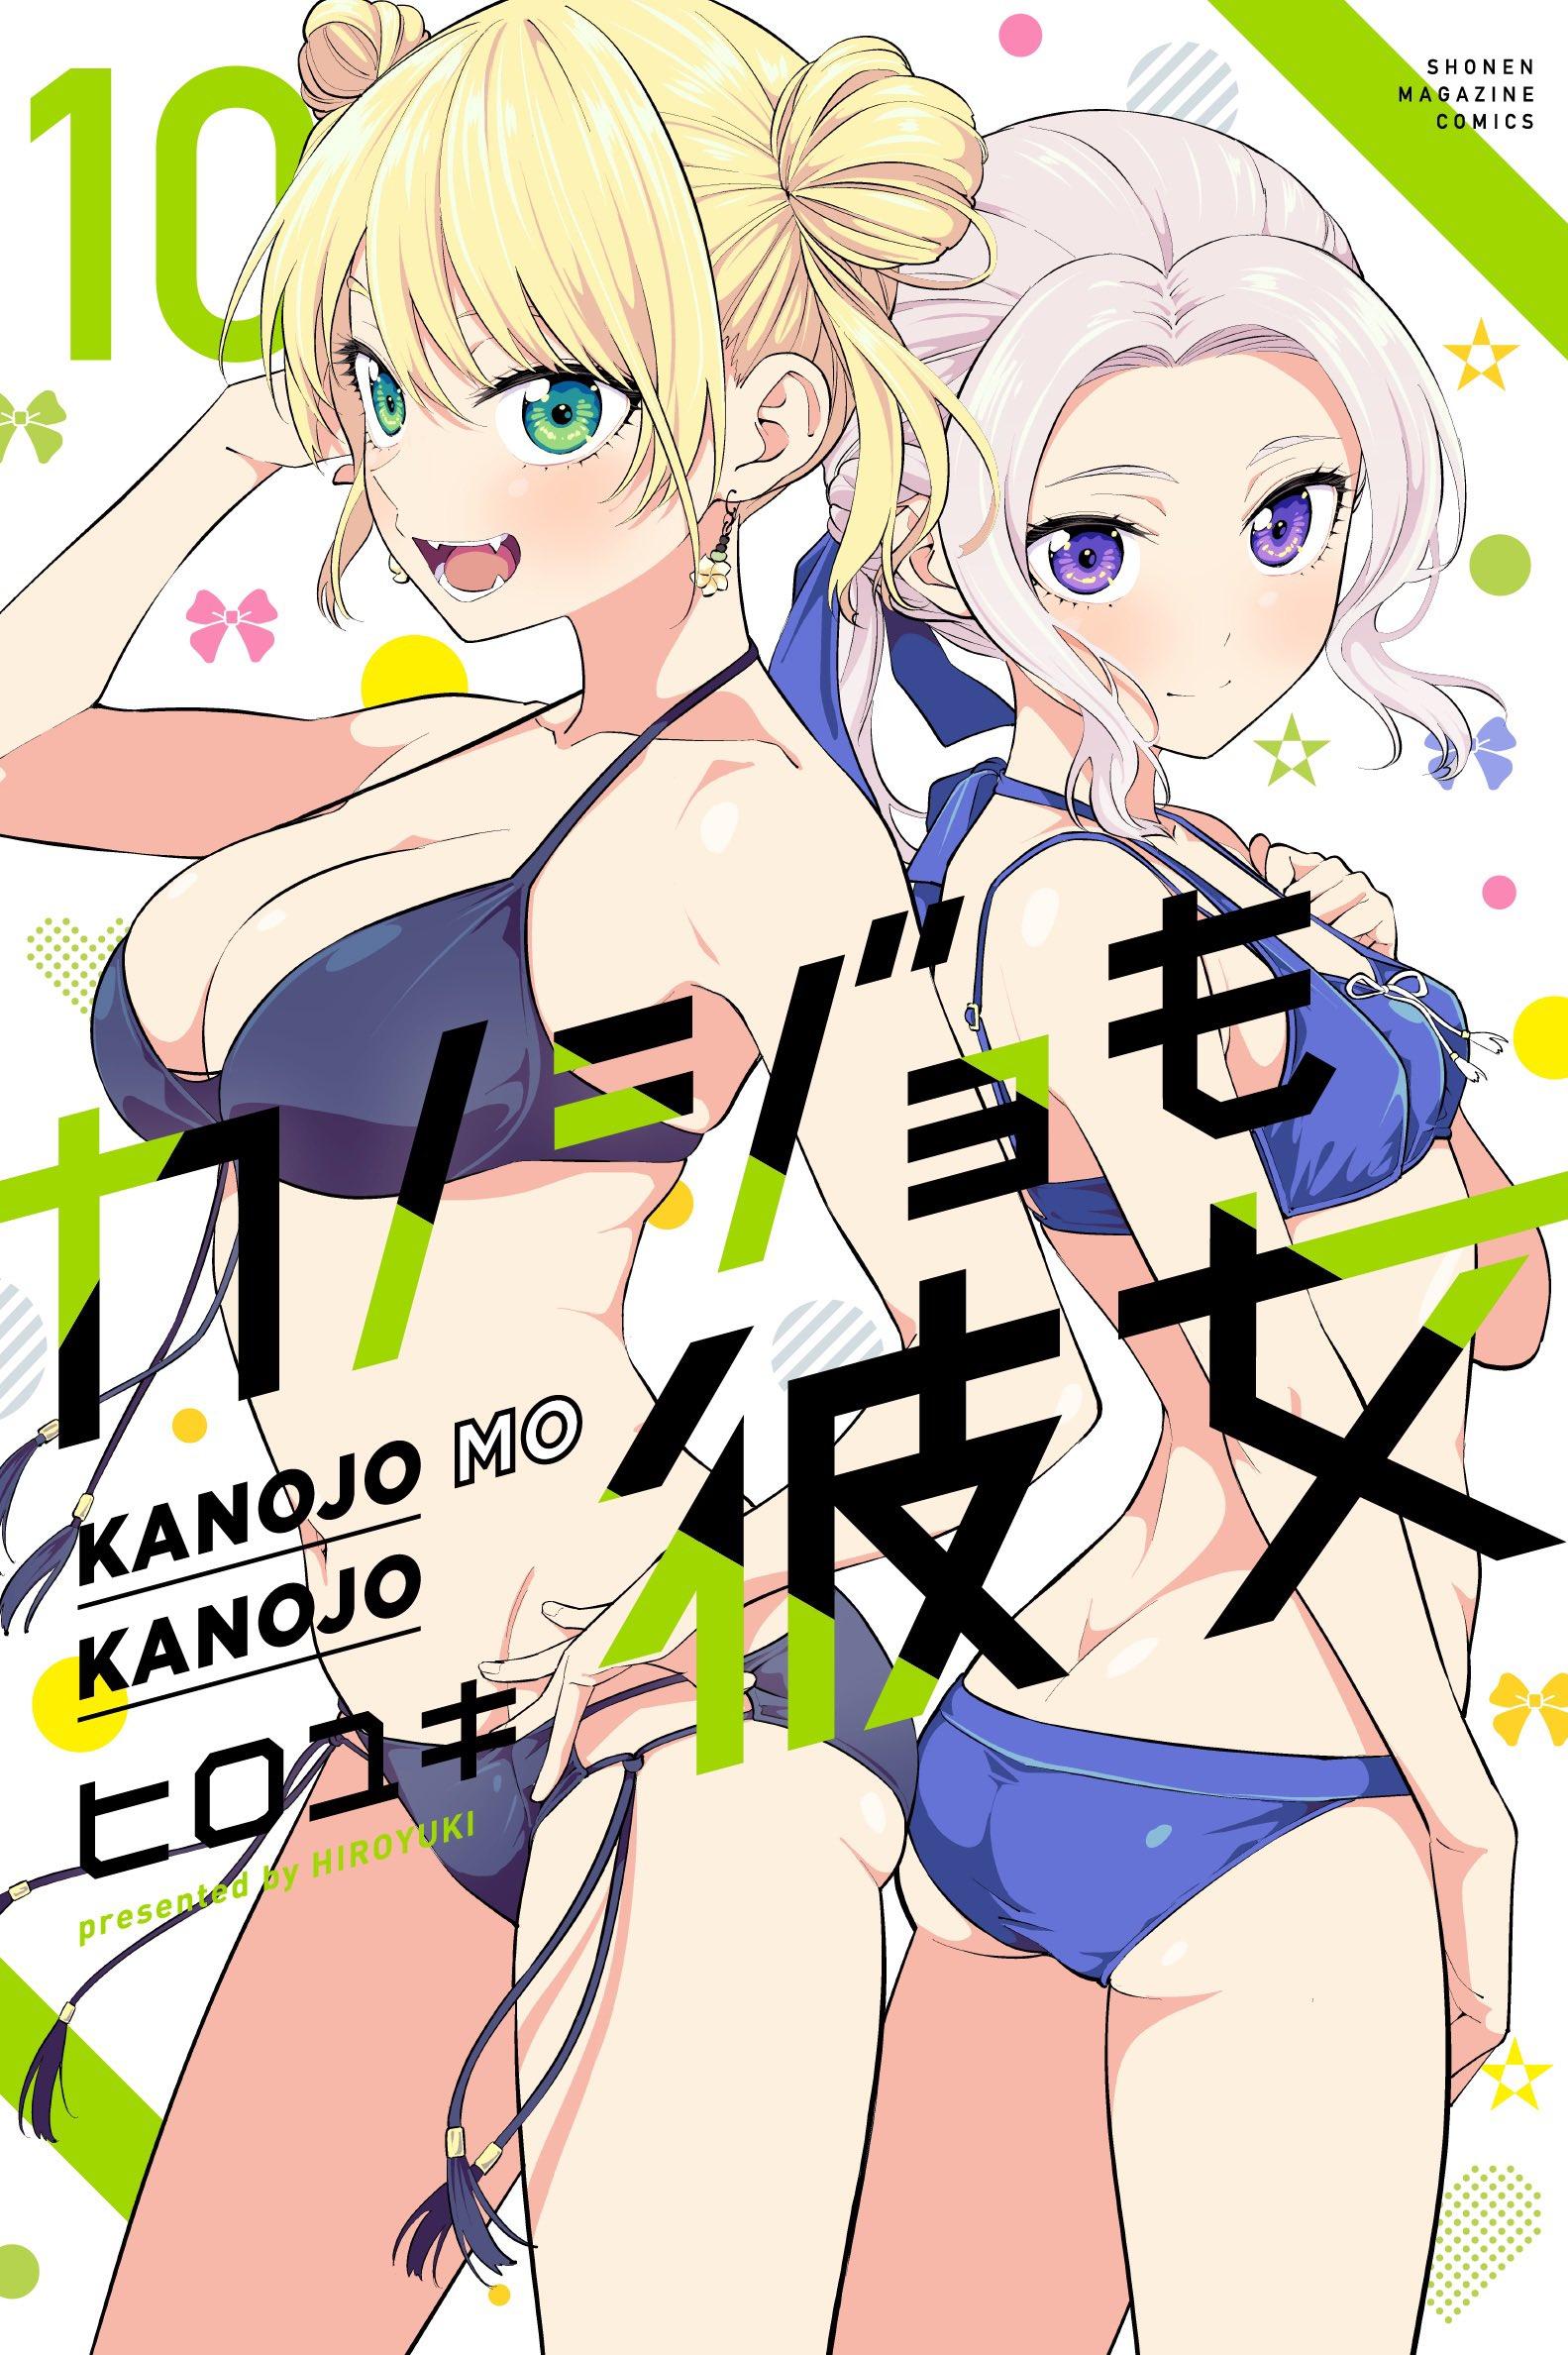 Capa do 10º Volume do Mangá Kanojo mo Kanojo é Estrelada por Rika e Shino